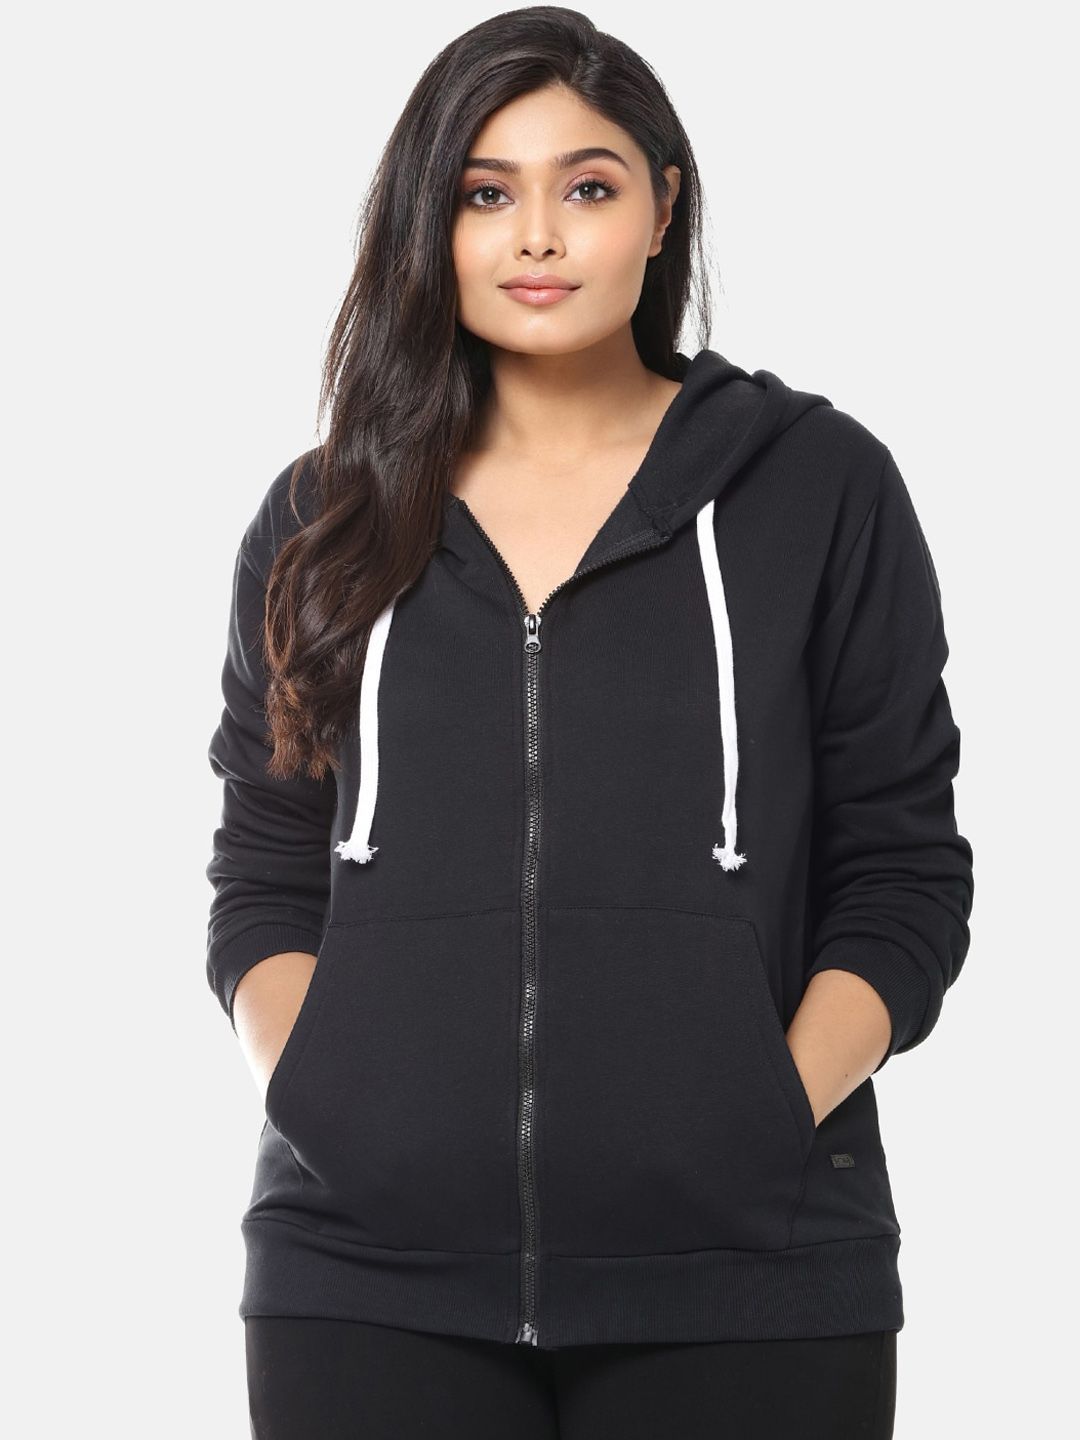 Instafab Plus Women Black Solid Hooded Sweatshirt Price in India